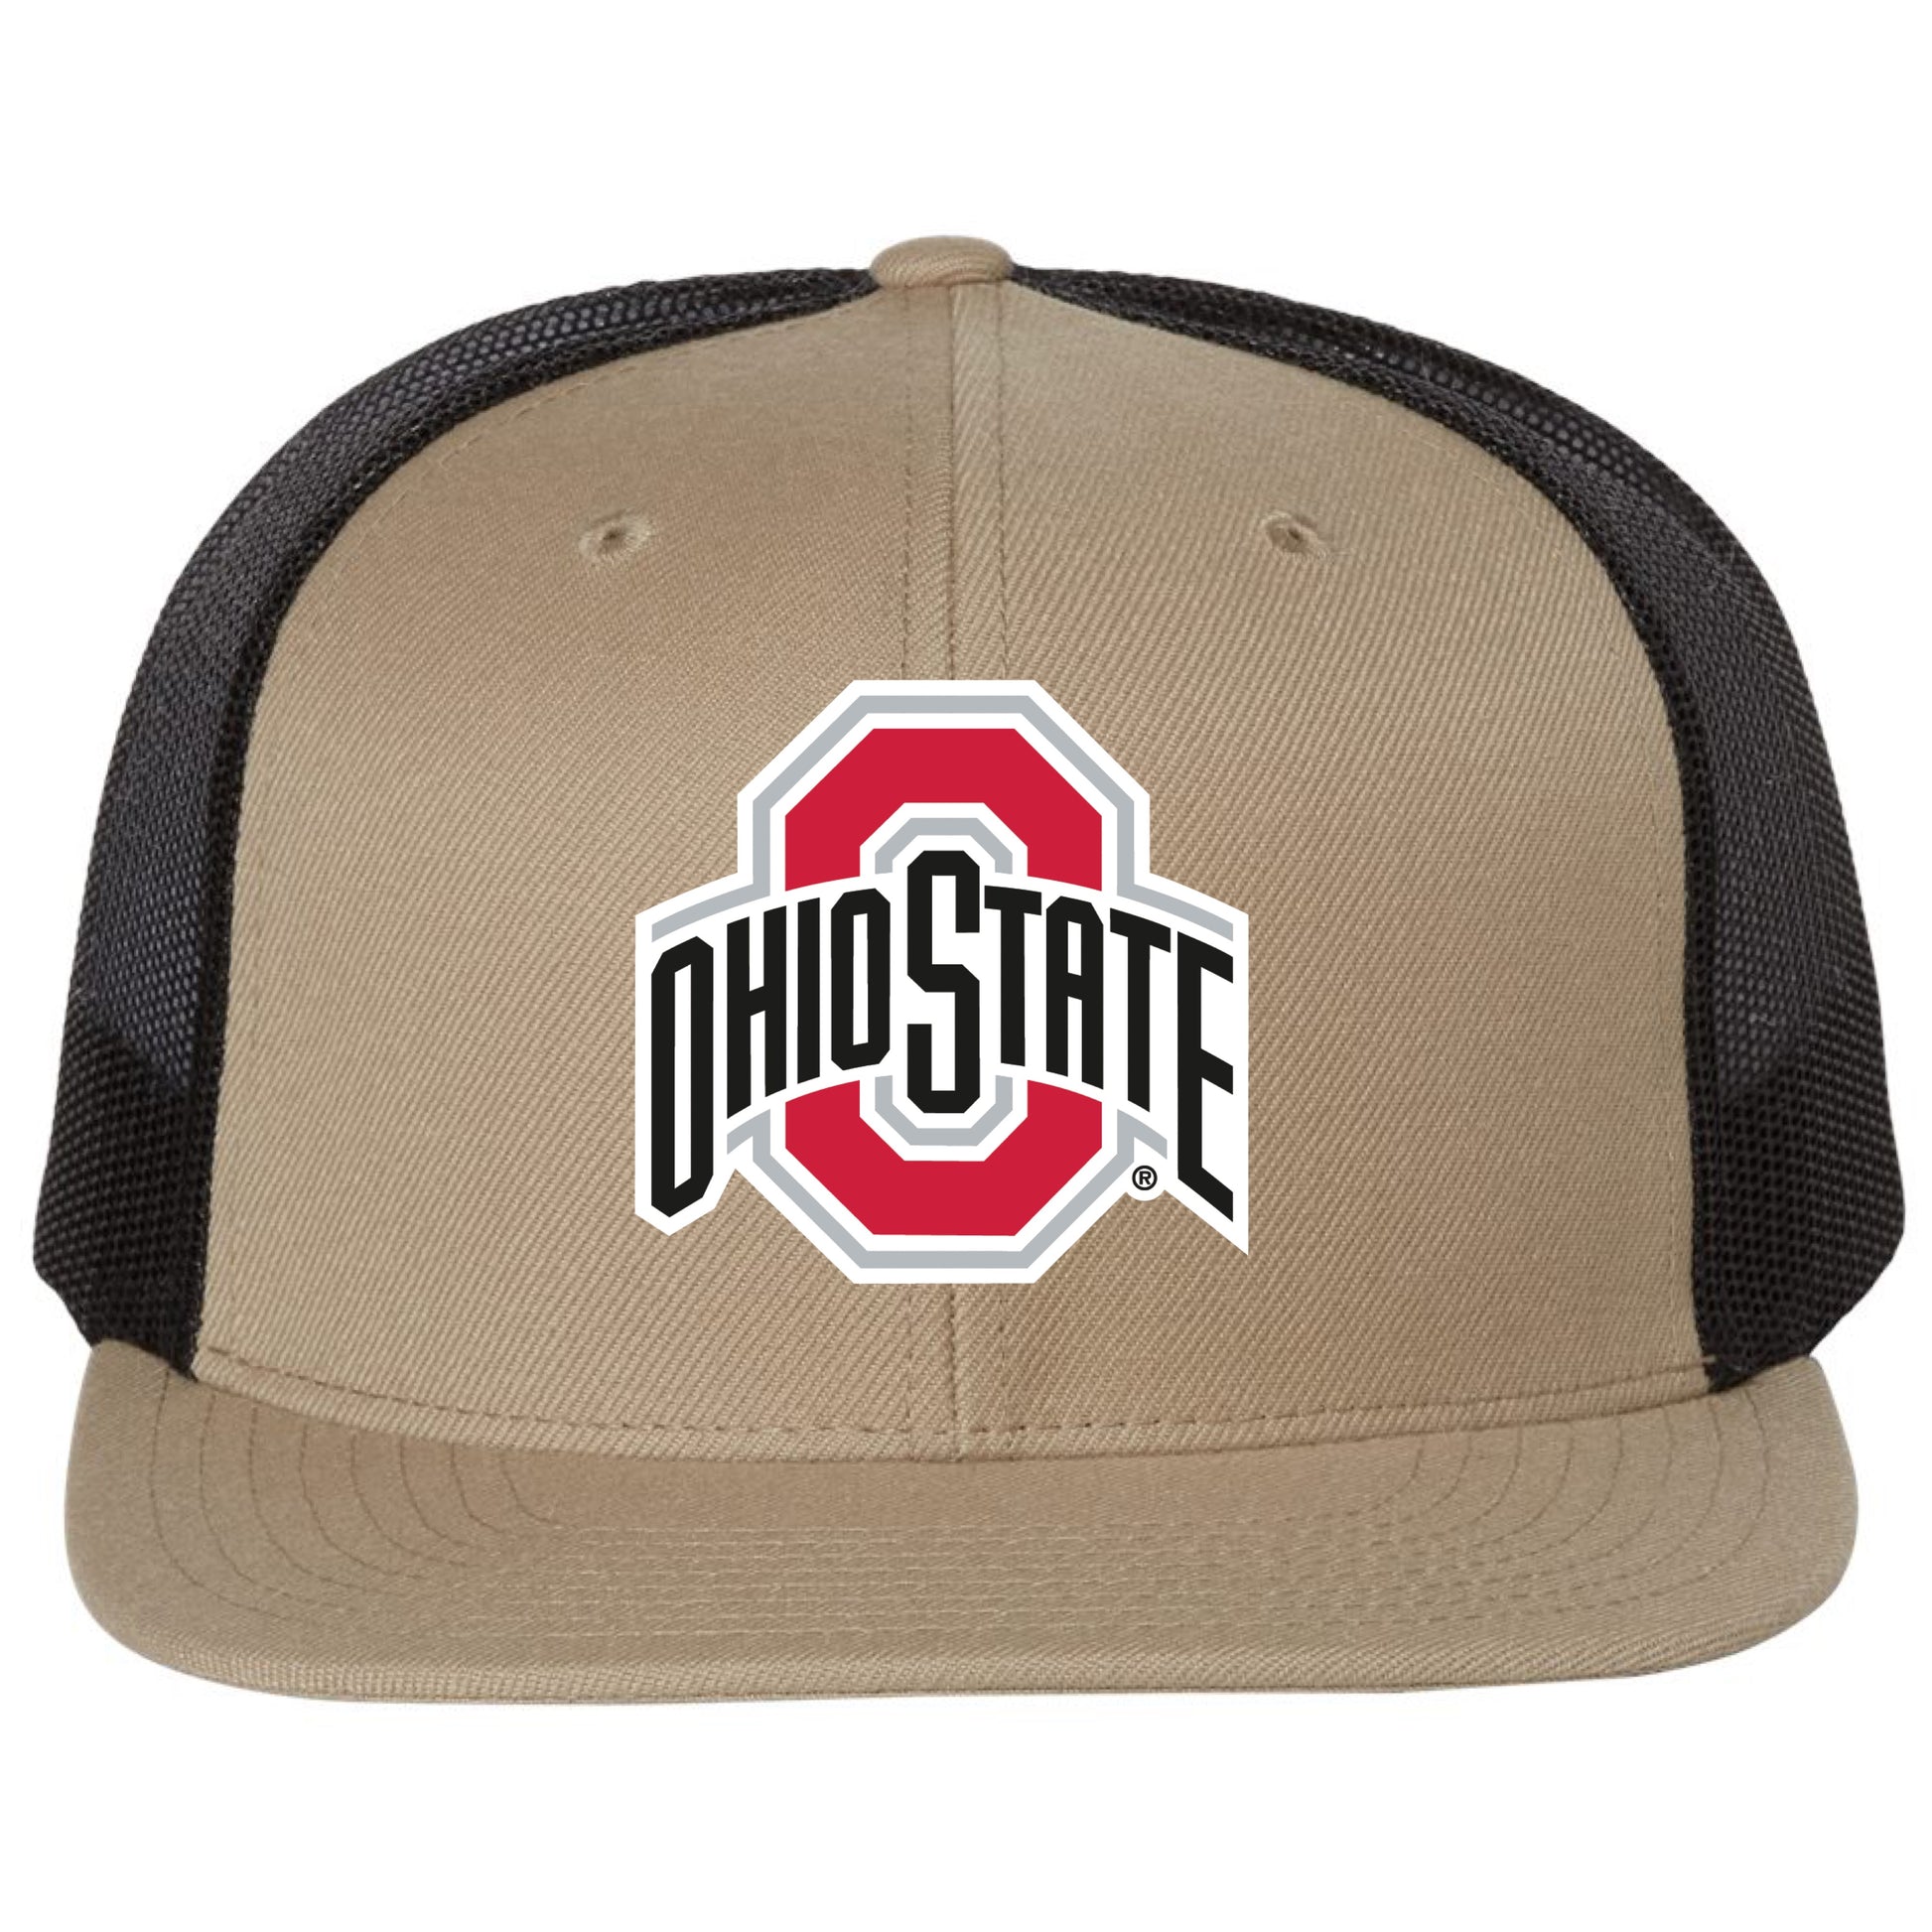 Ohio State Buckeyes 3D PVC Patch Wool Blend Flat Bill Hat- Khaki/ Black - Ten Gallon Hat Co.